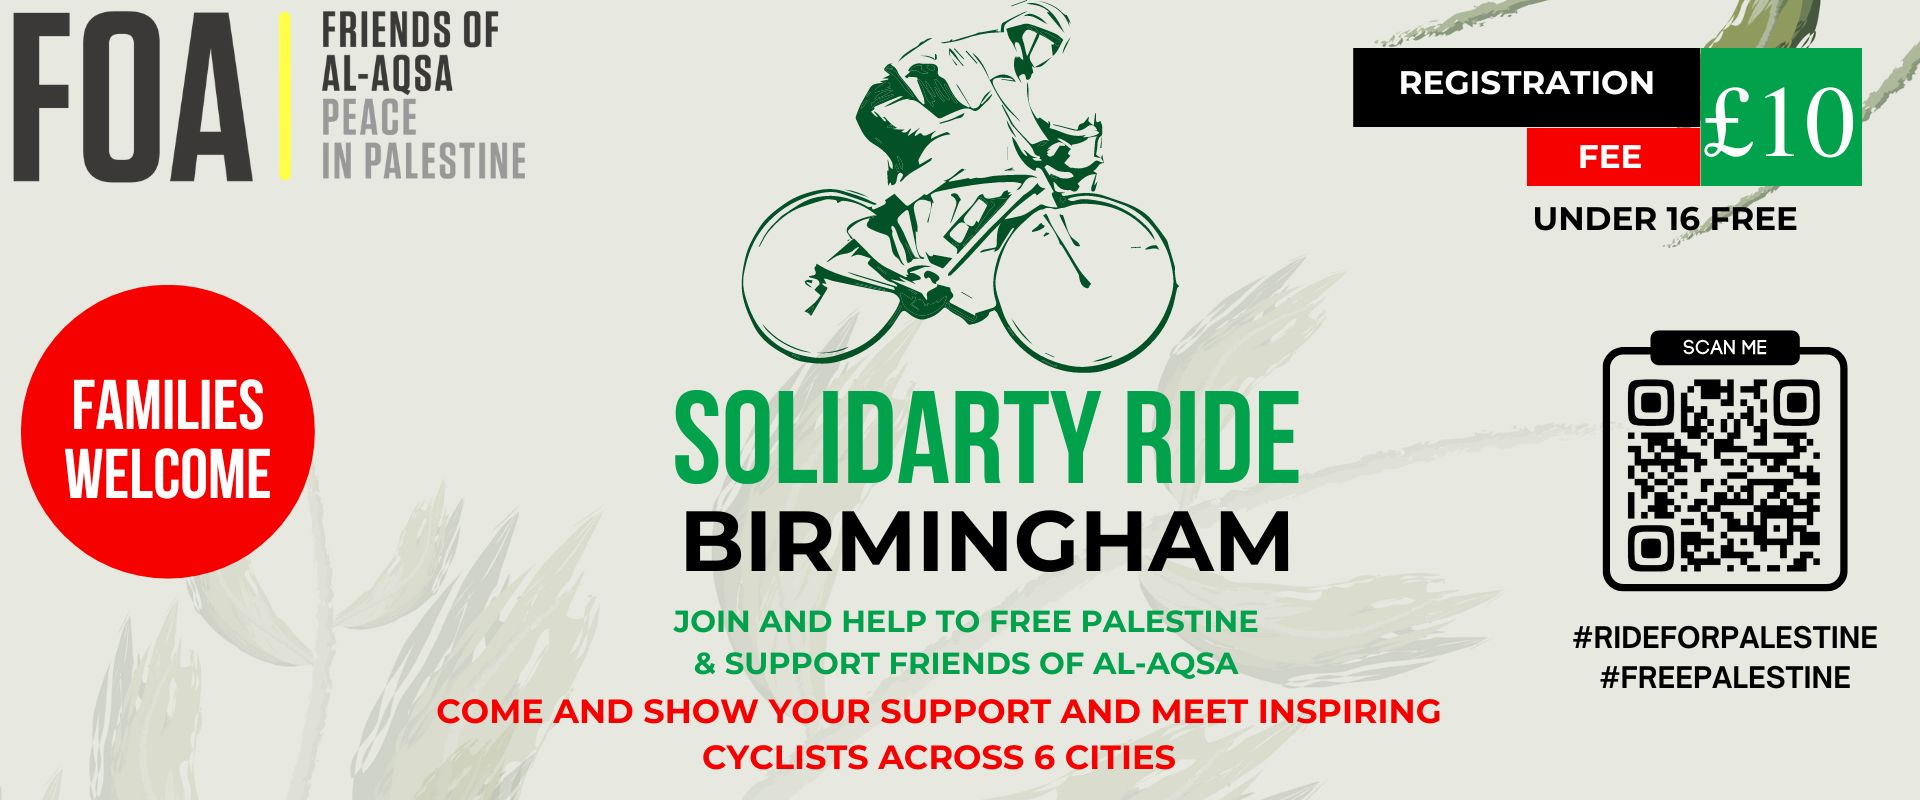 Palestine Solidarity Ride - Birmingham